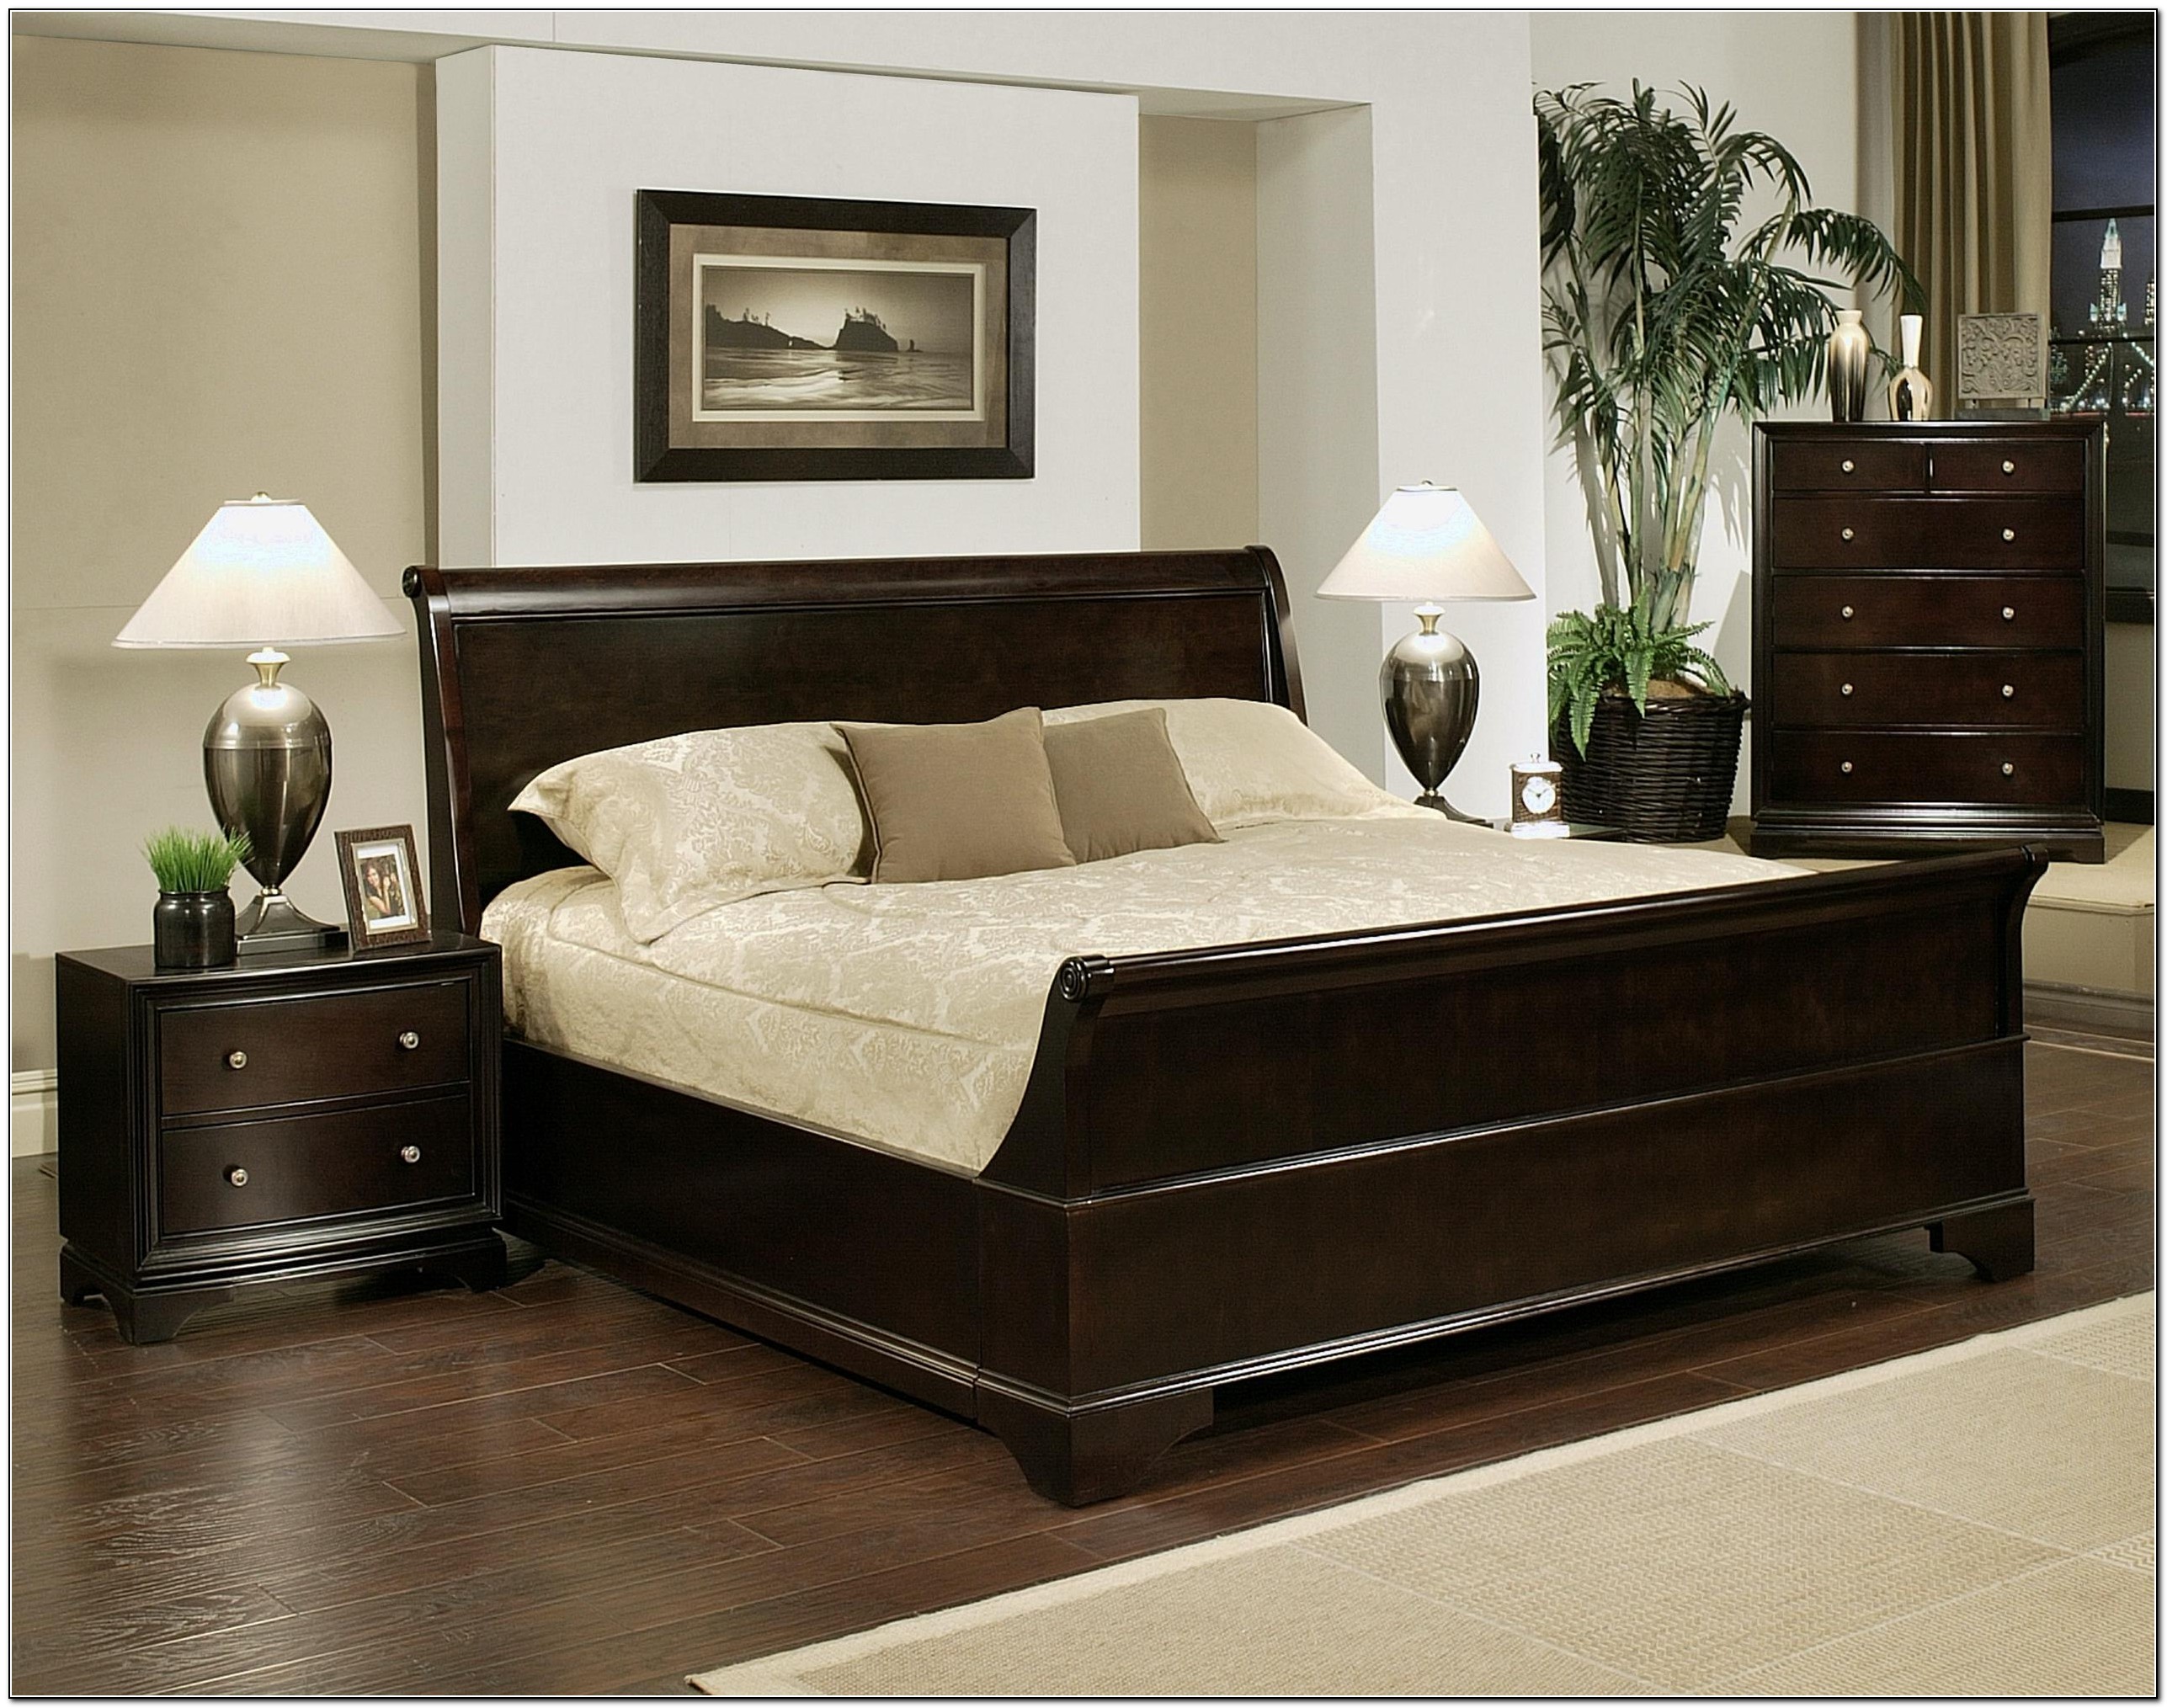 King Size Bed Frame Ideas - Beds : Home Design Ideas #5onExevP1d2570